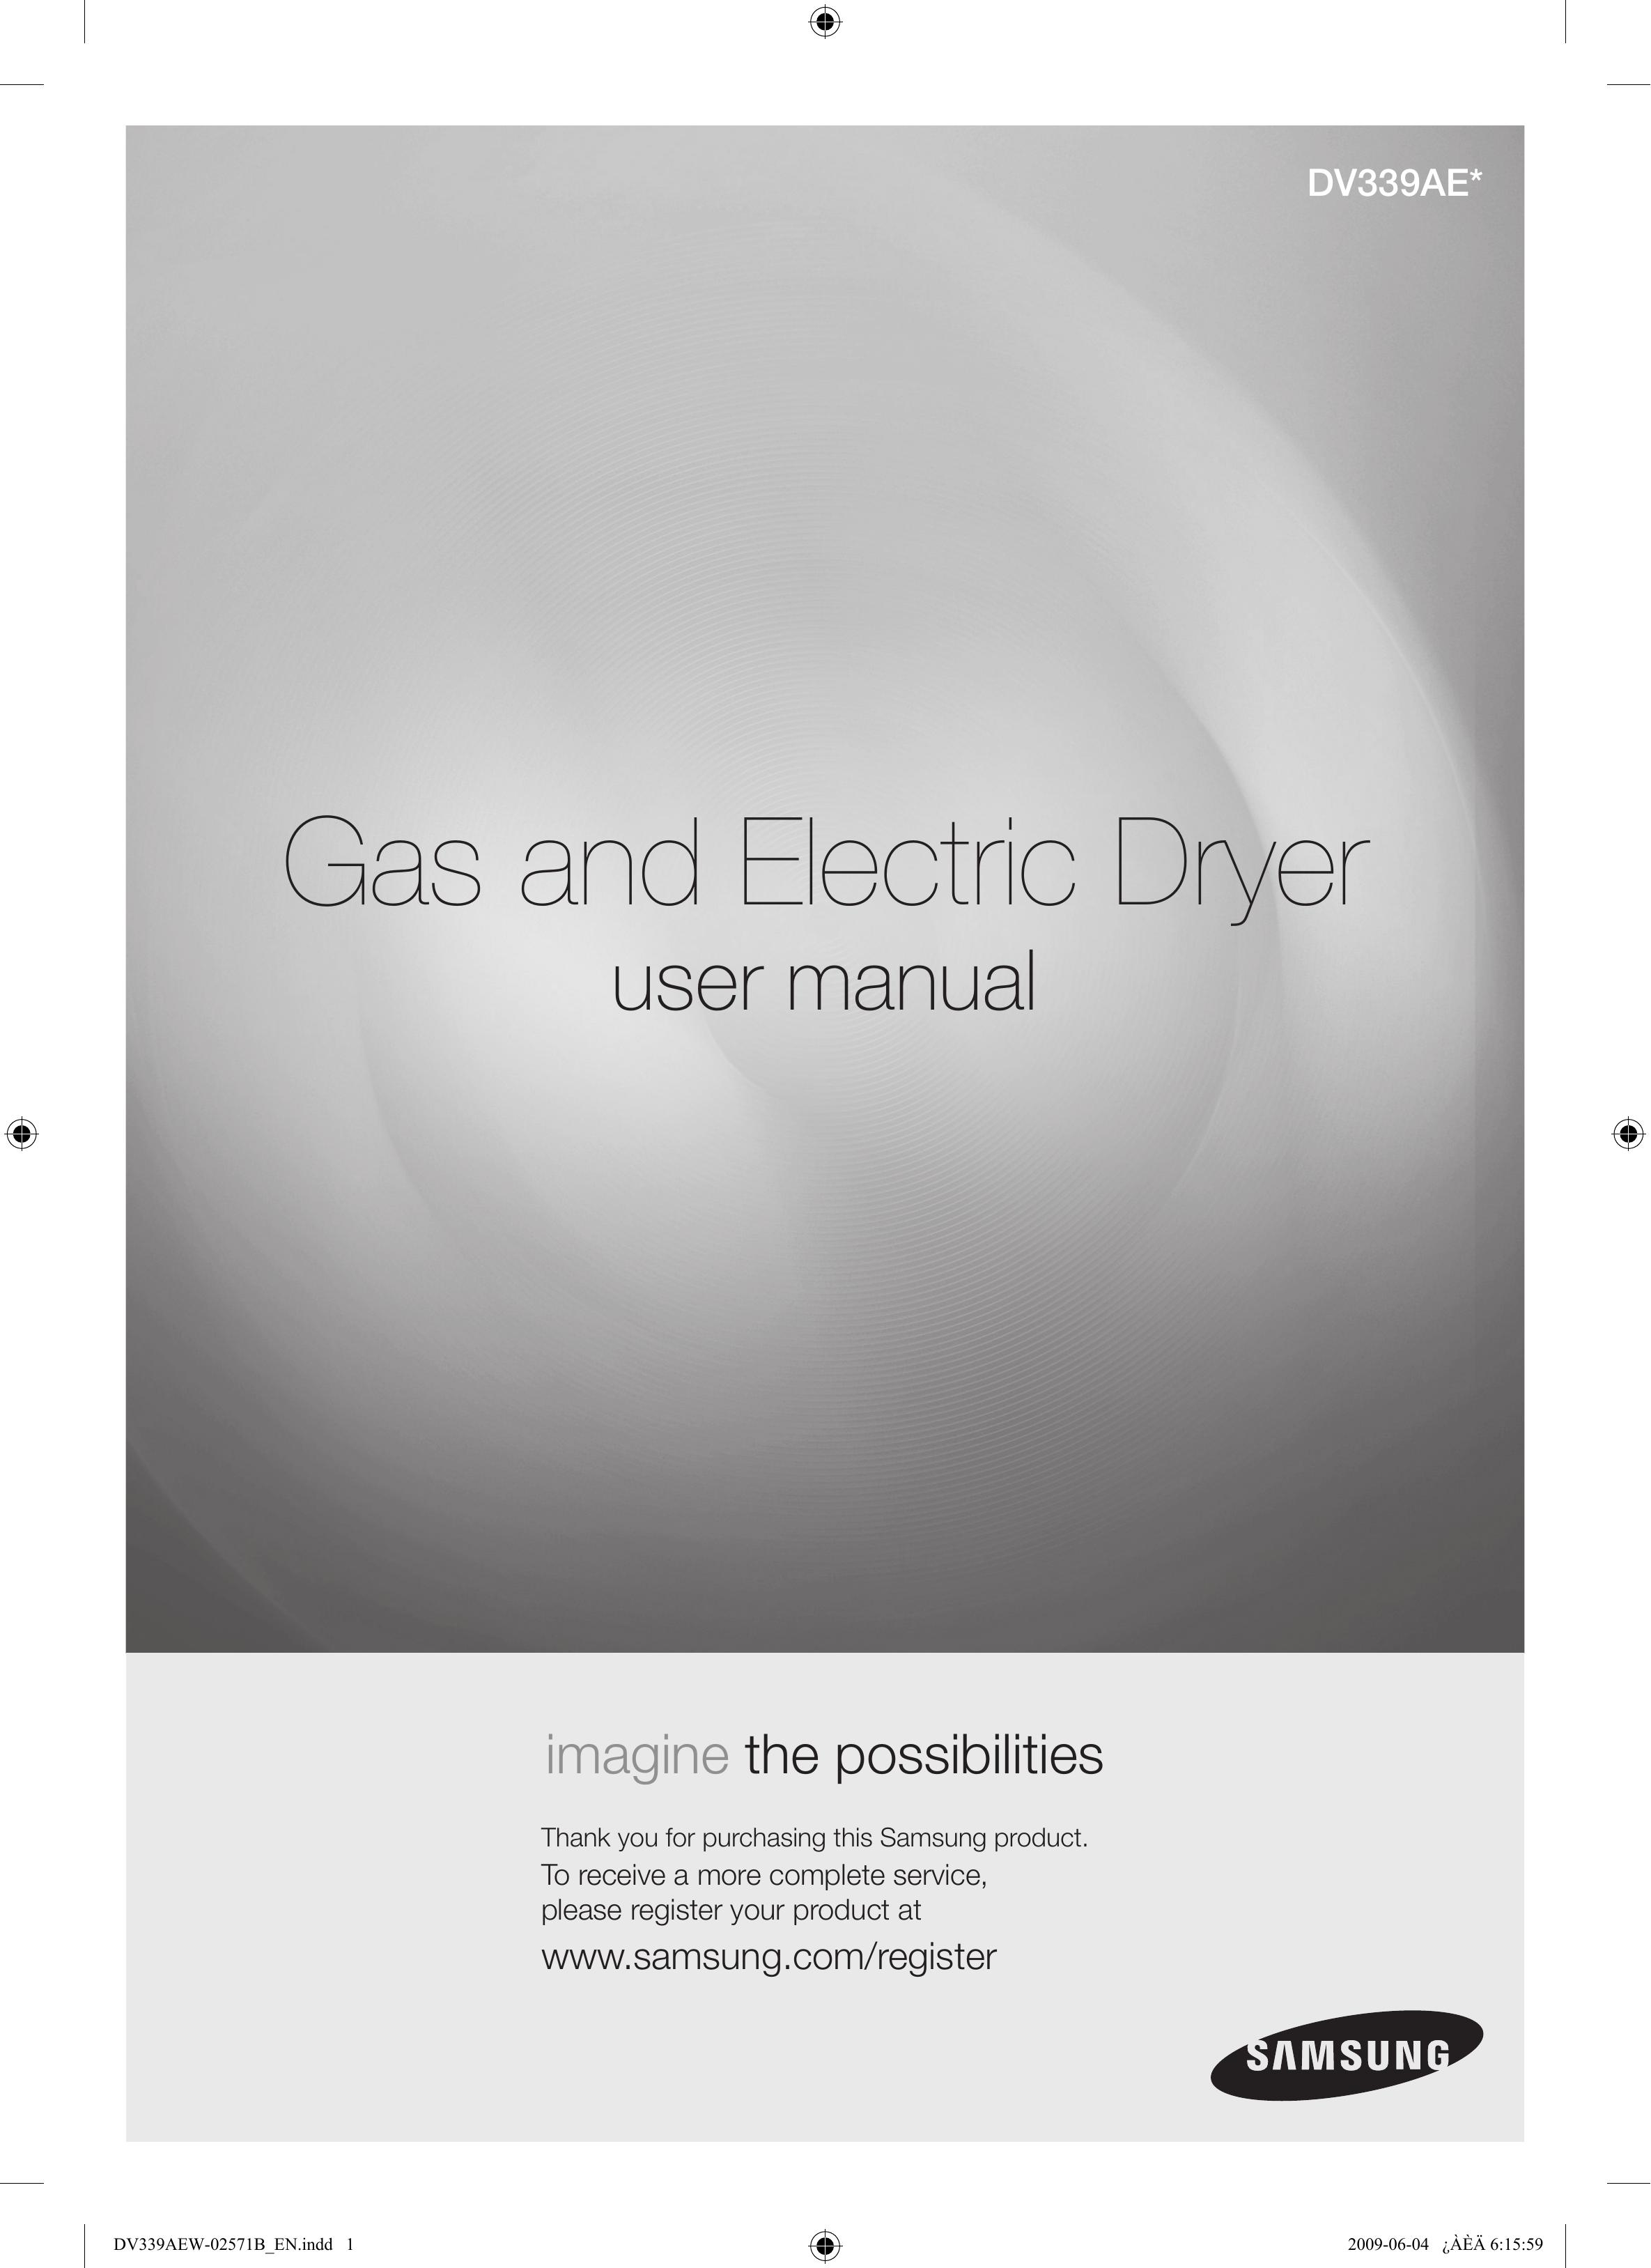 Samsung DV339AE* Clothes Dryer User Manual